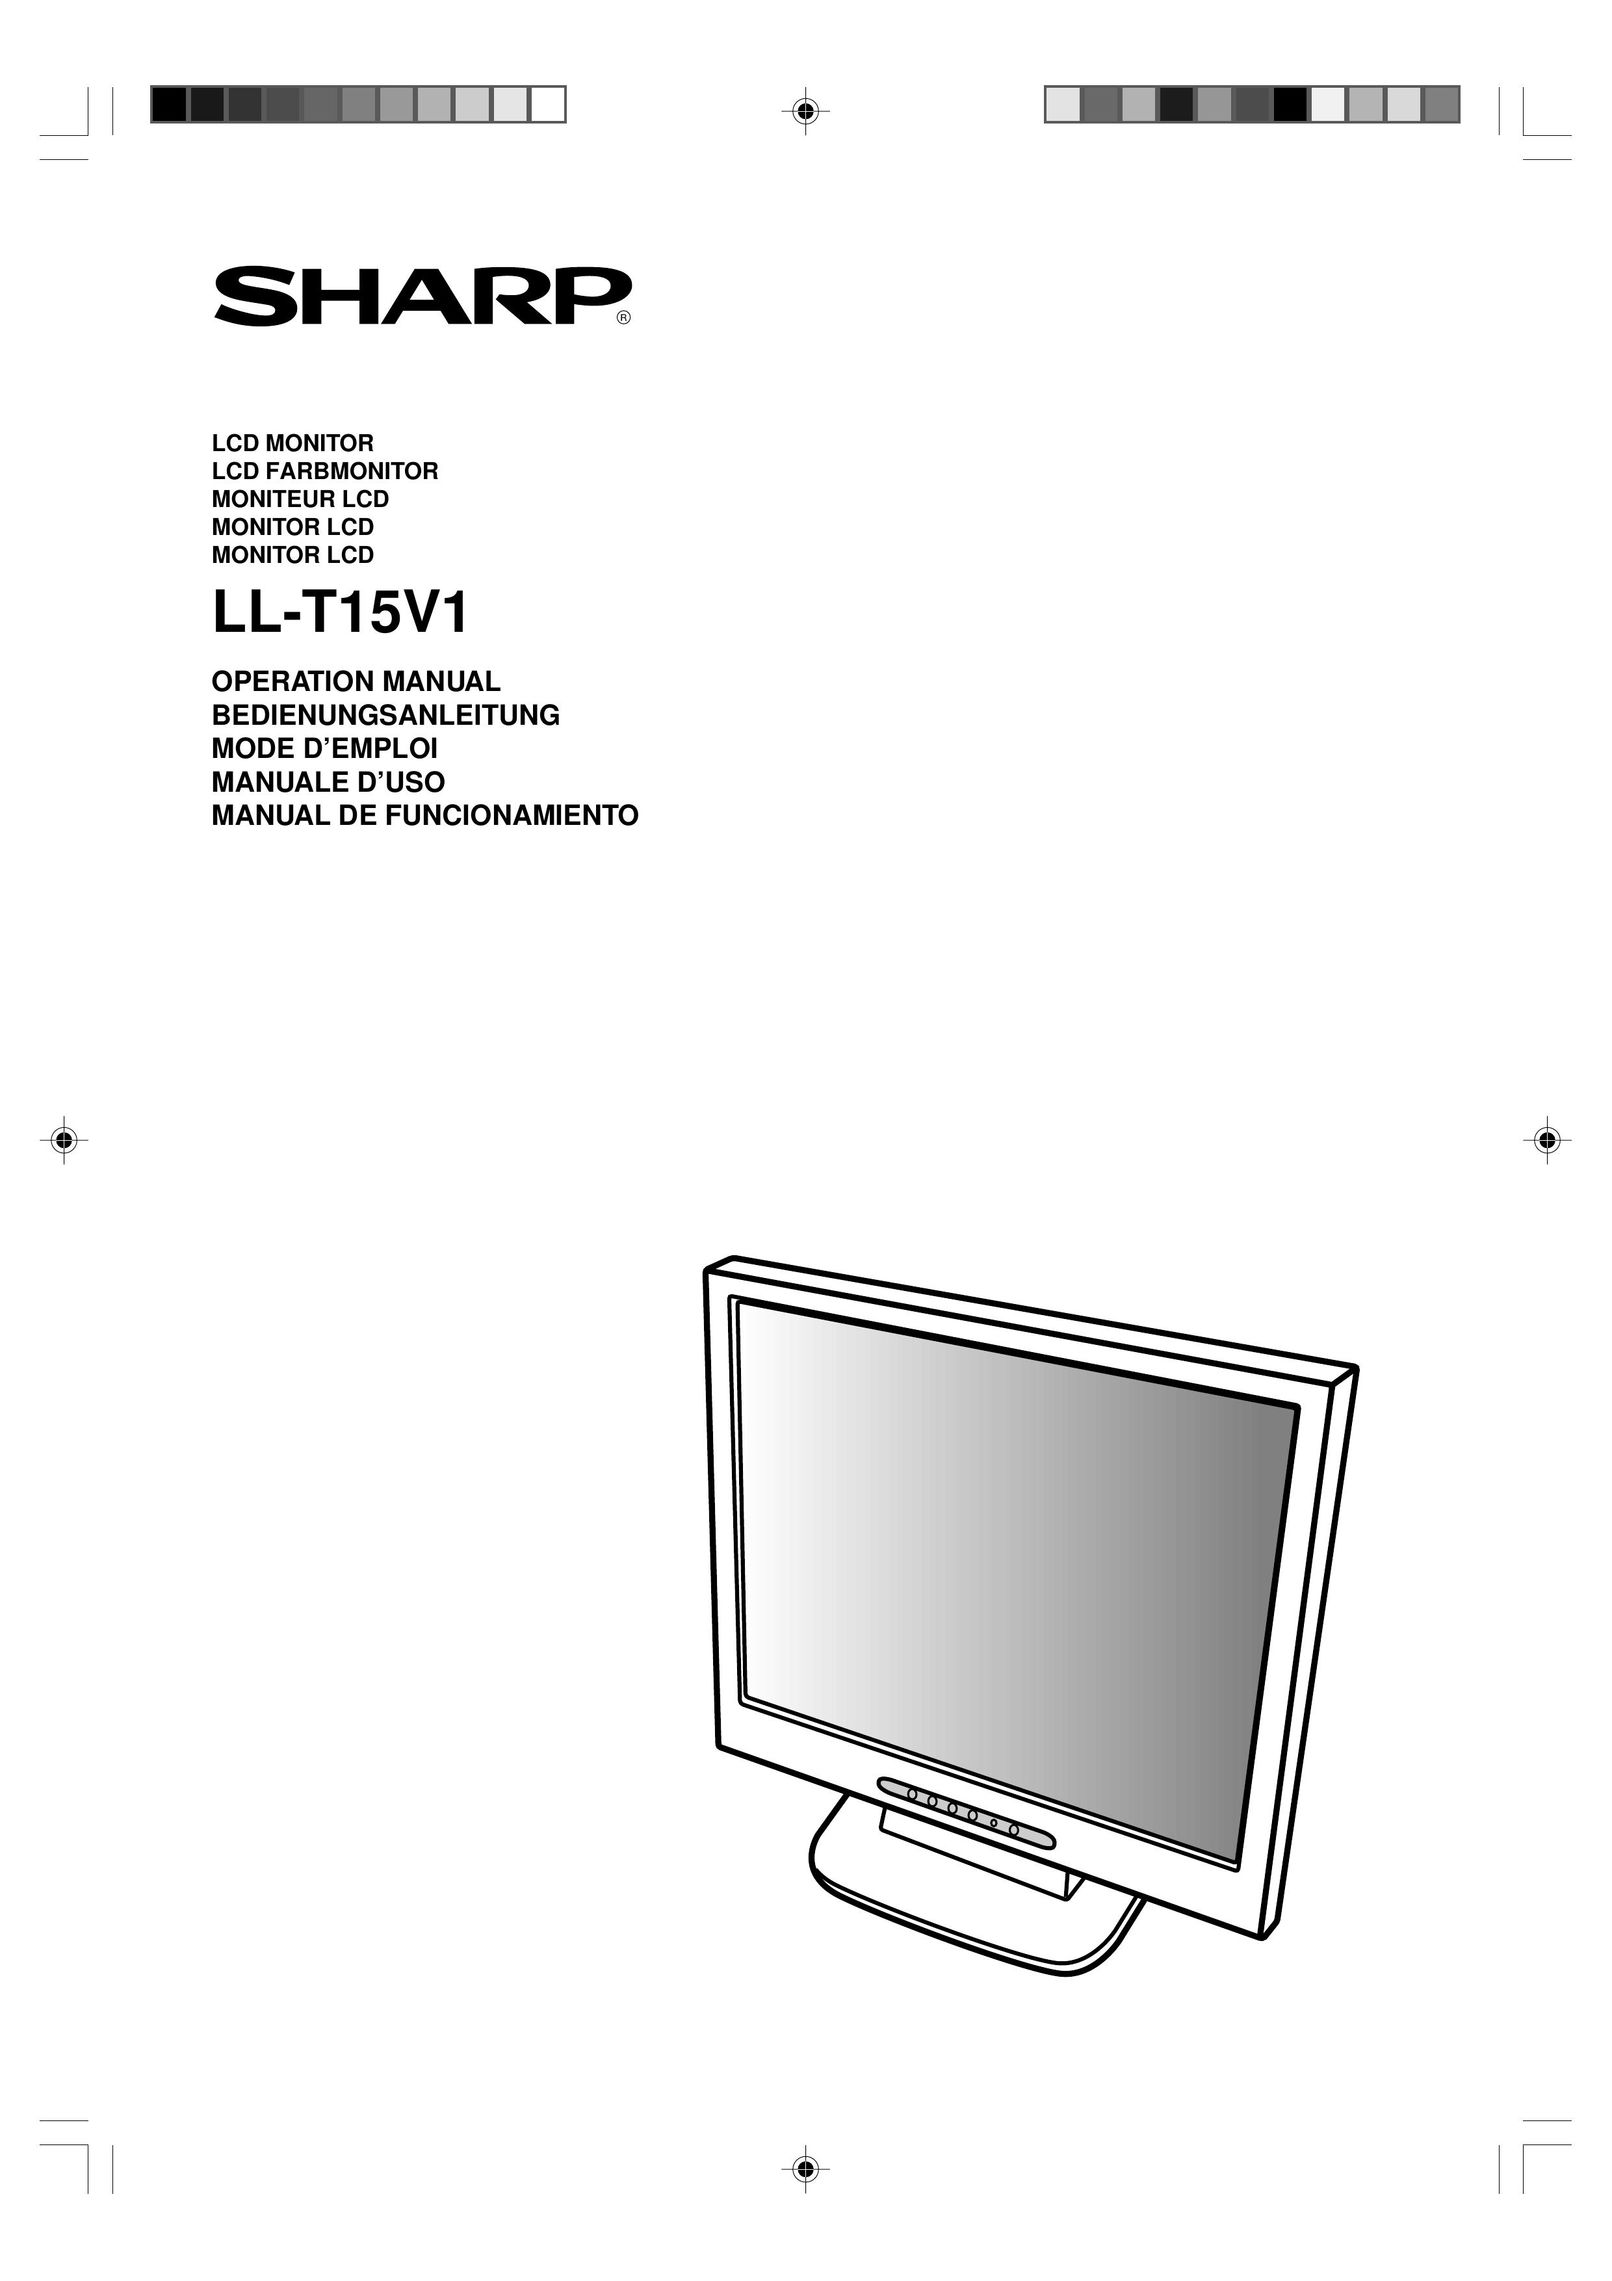 Sharp LL-T15V1 Computer Monitor User Manual